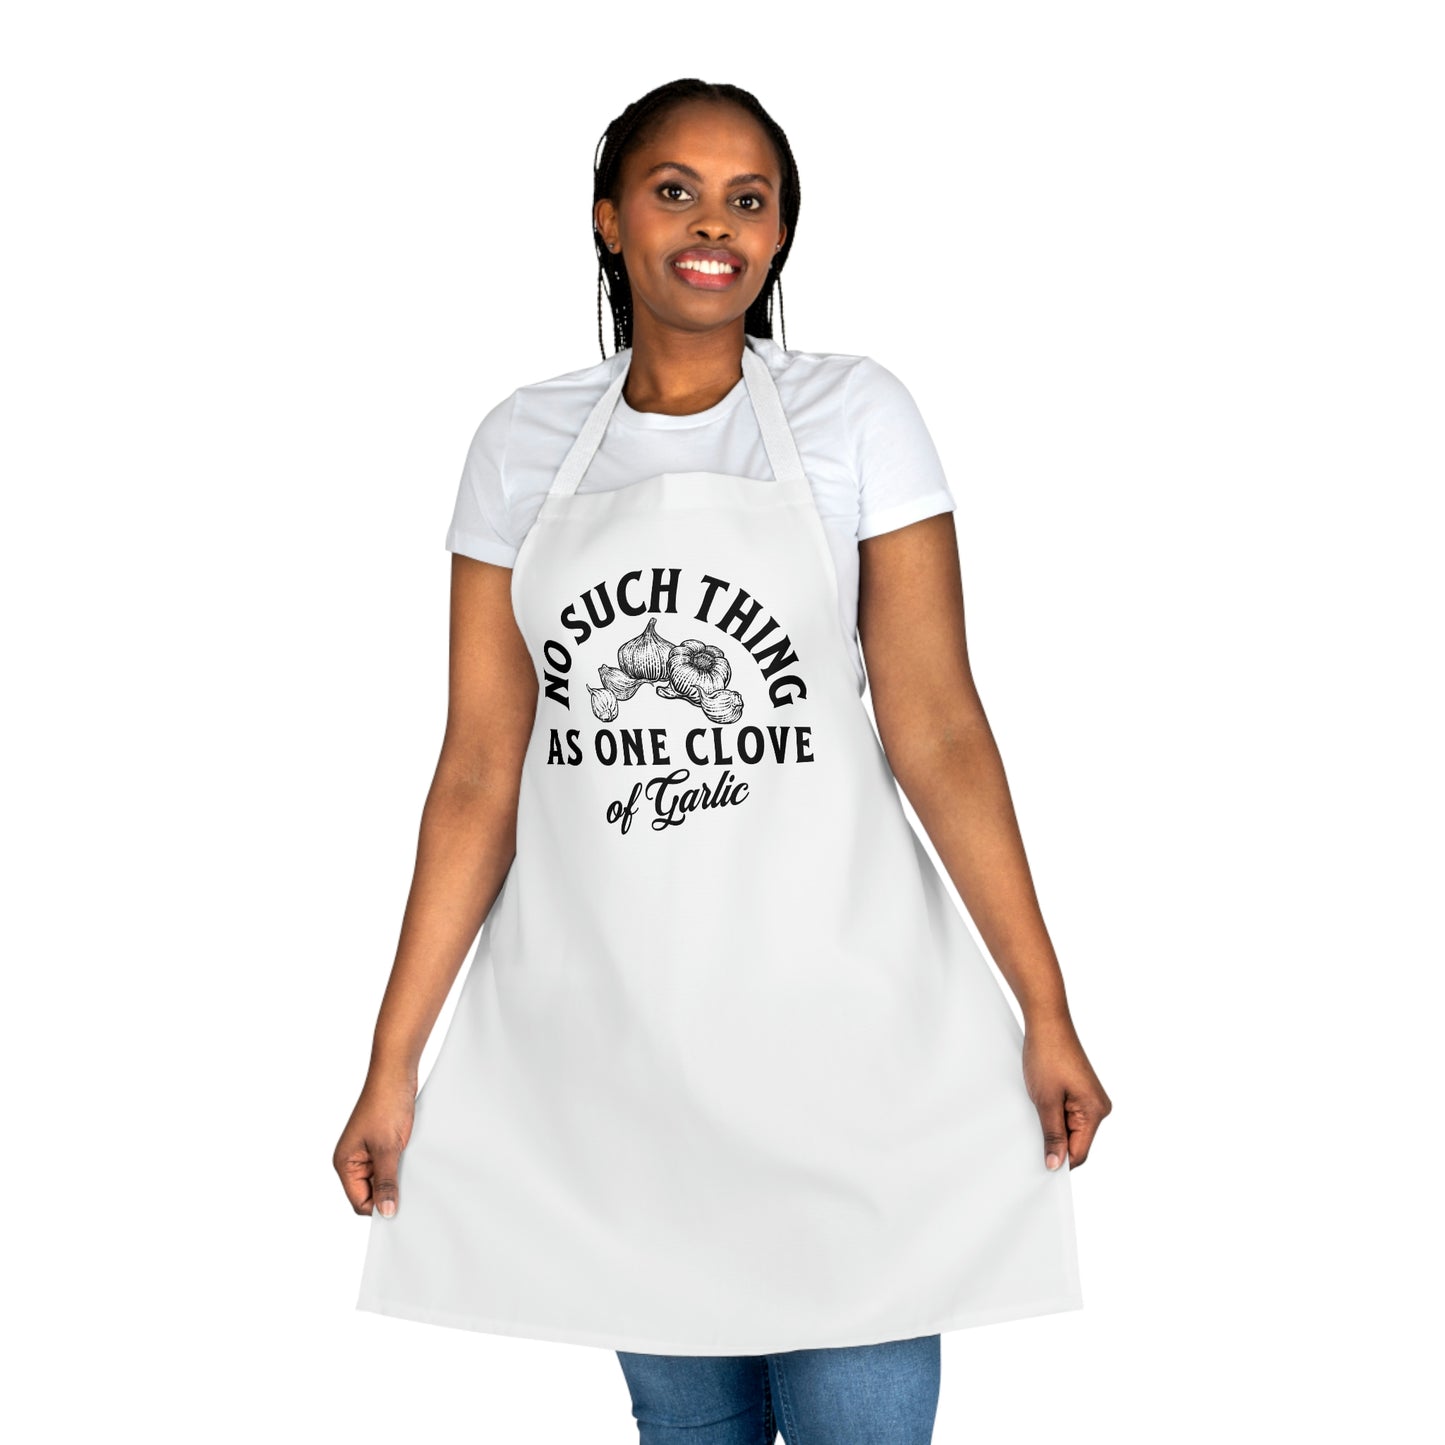 "One Clove of Garlic" apron